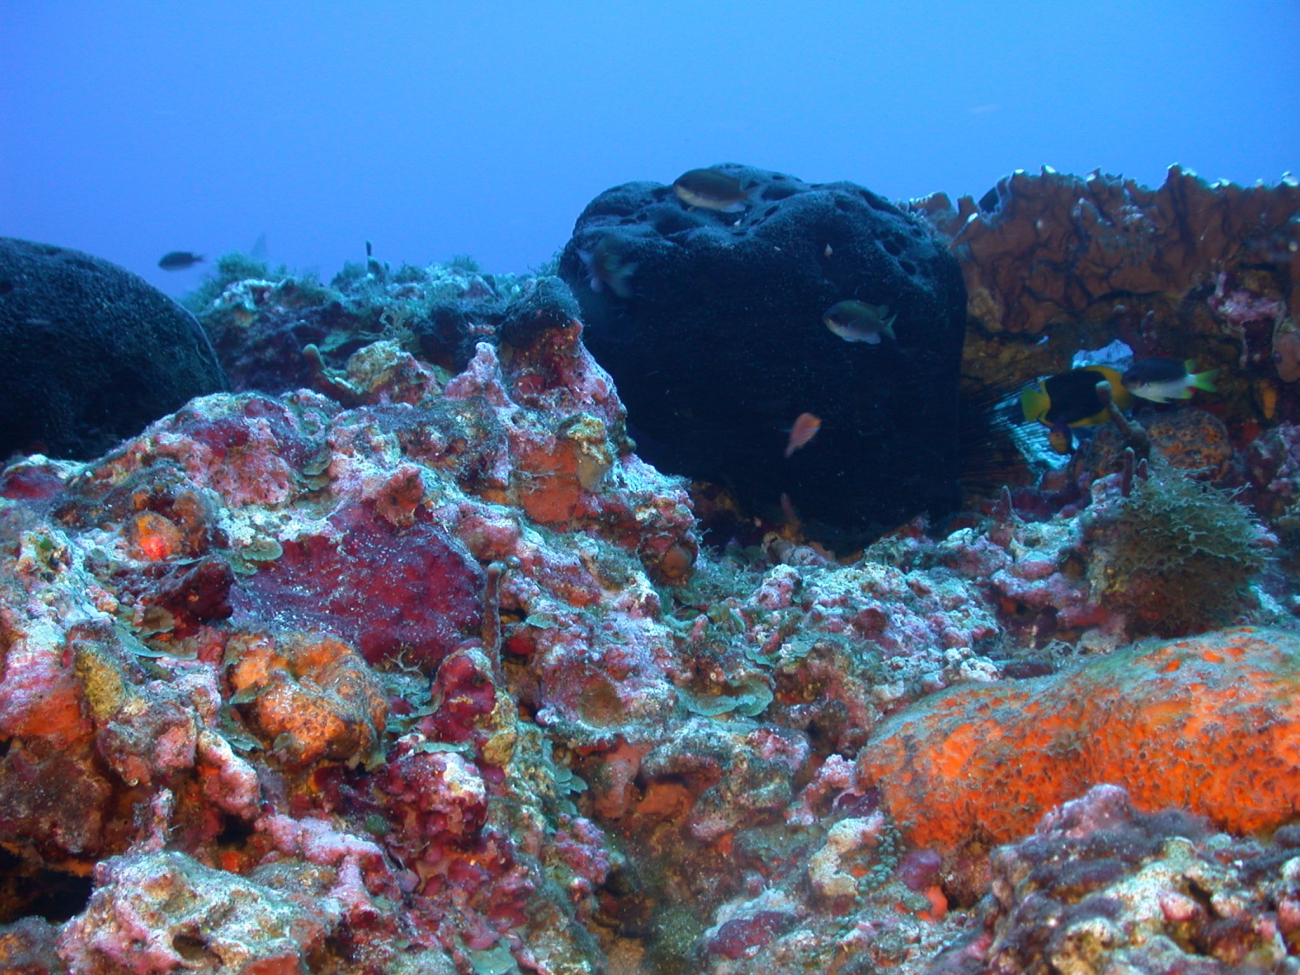 A black sponge dominates this reef scene